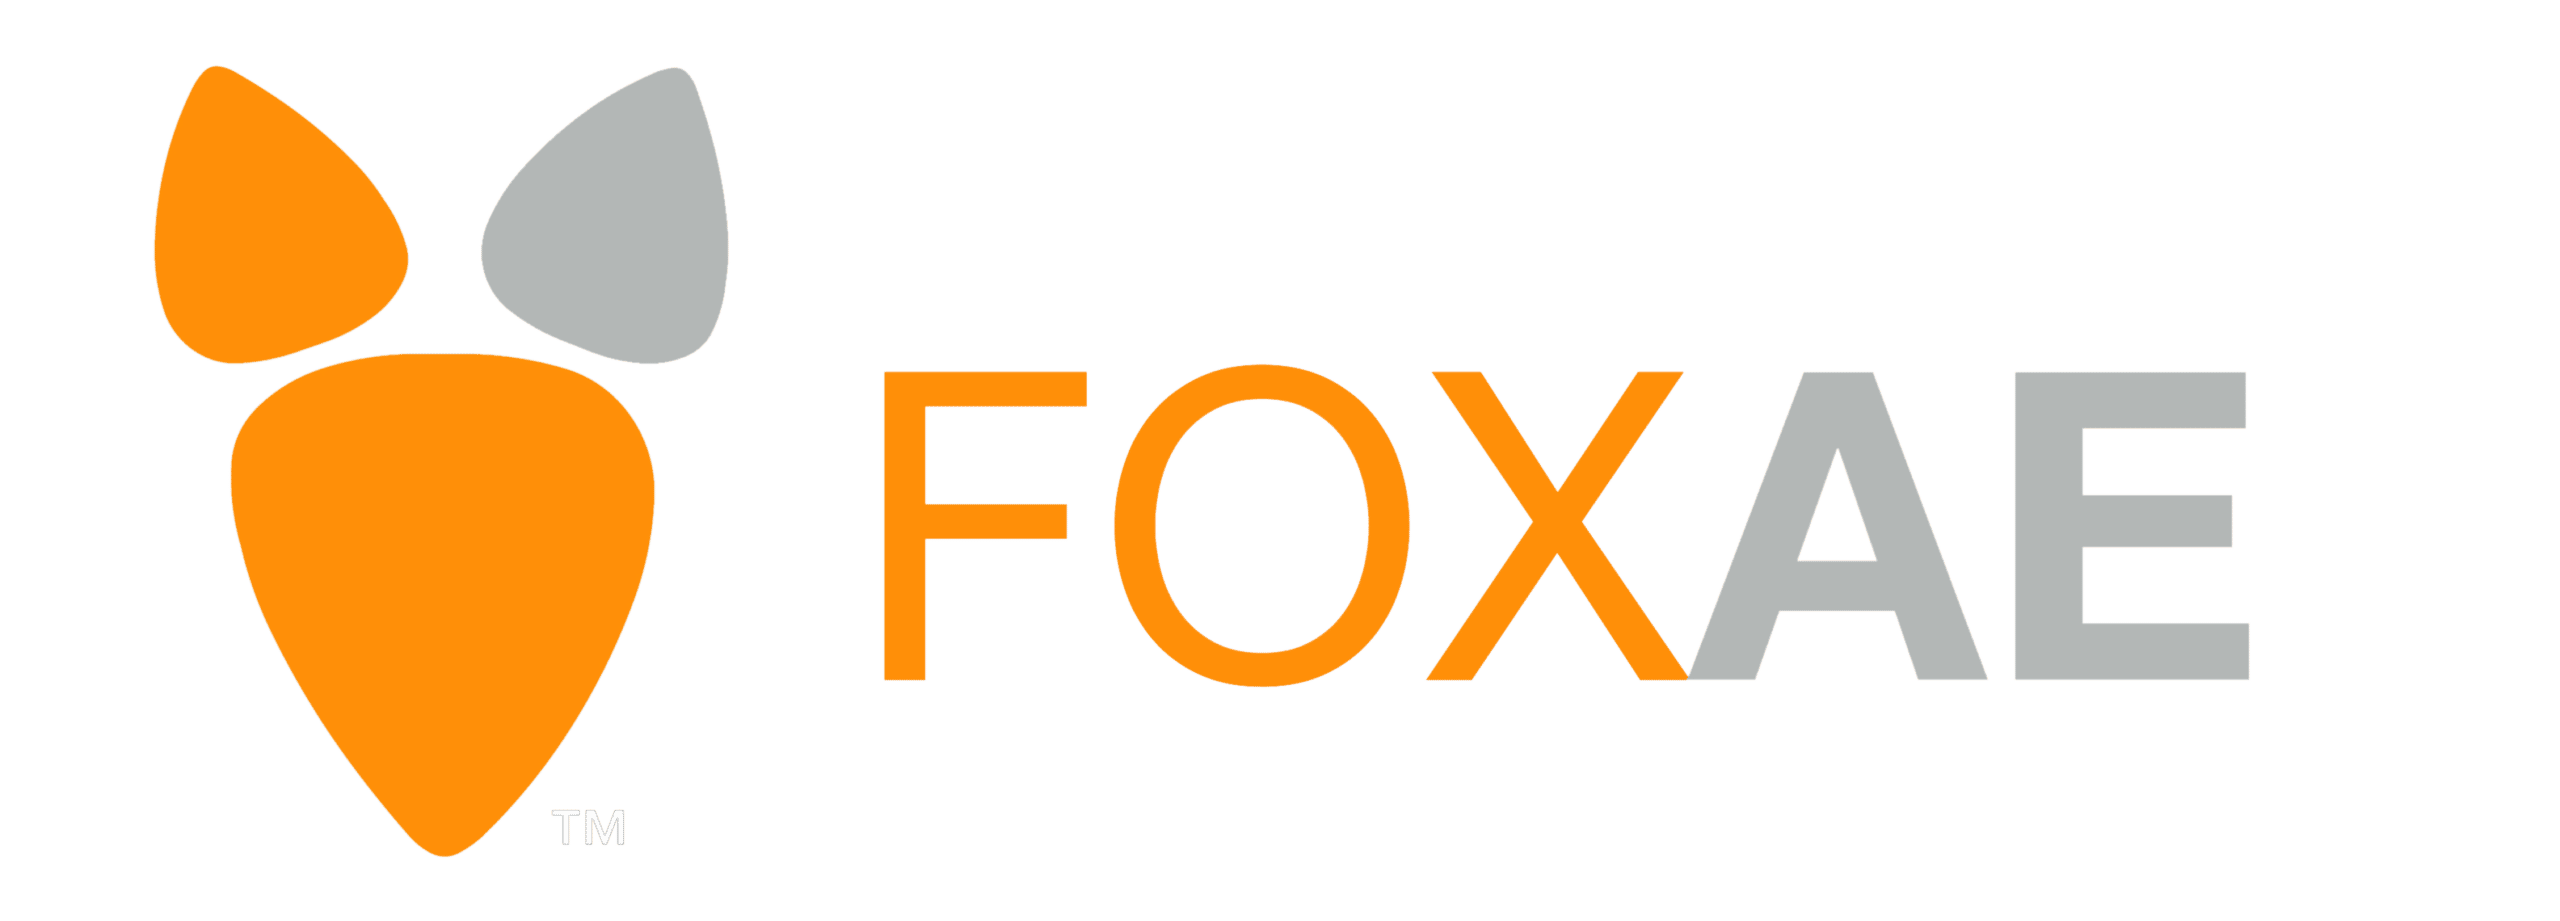 fox-ae logo